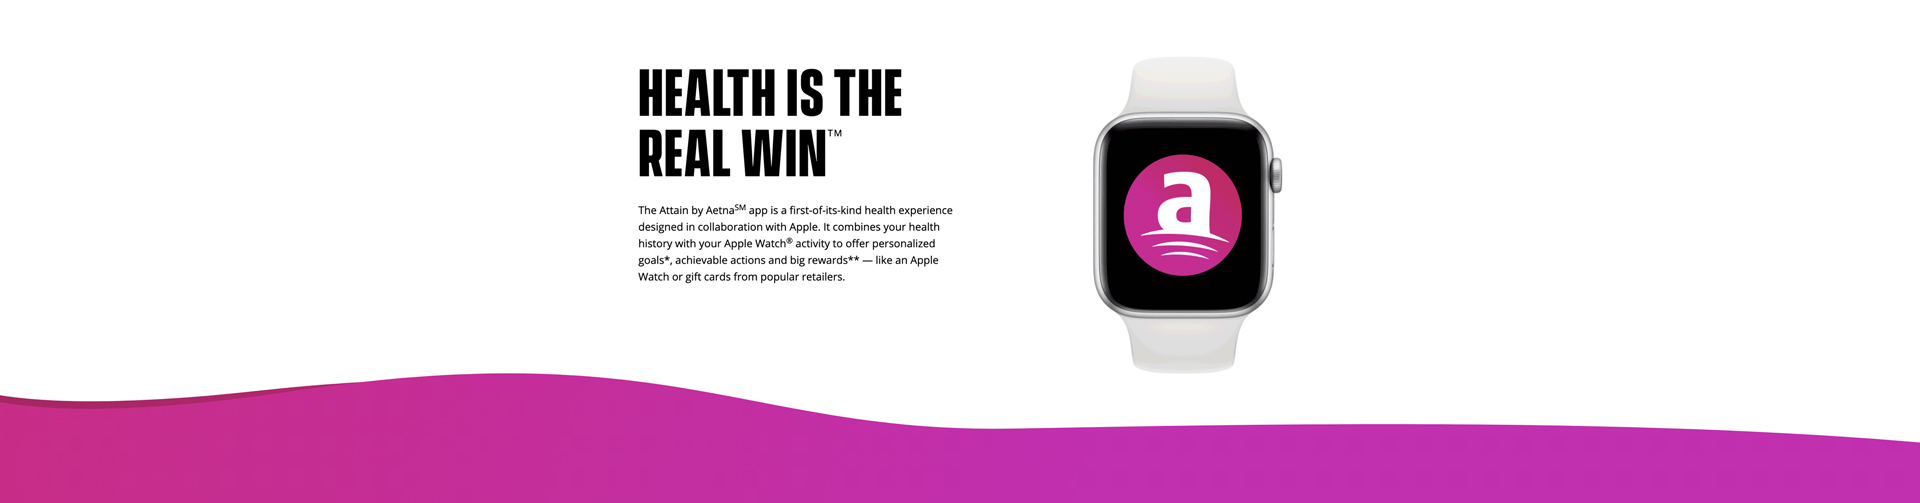 Attain Wellness App Image